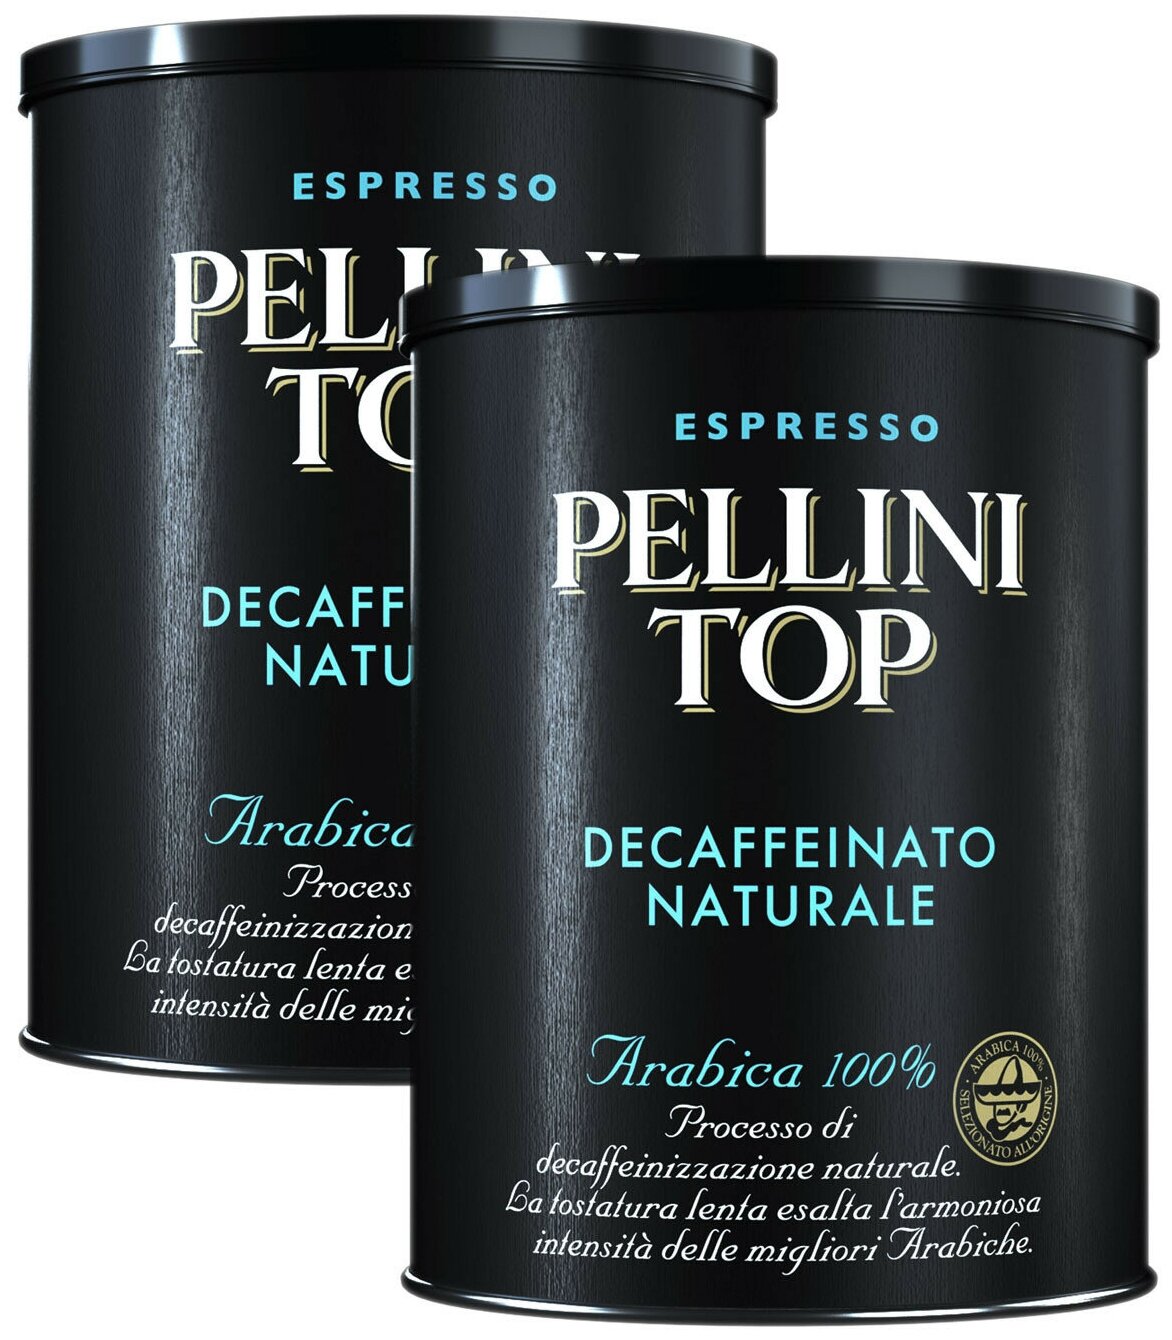 Кофе молотый Pellini Top Decaffeinato Naturale (Топ без кофеина) ж/б, 2x250г - фотография № 1